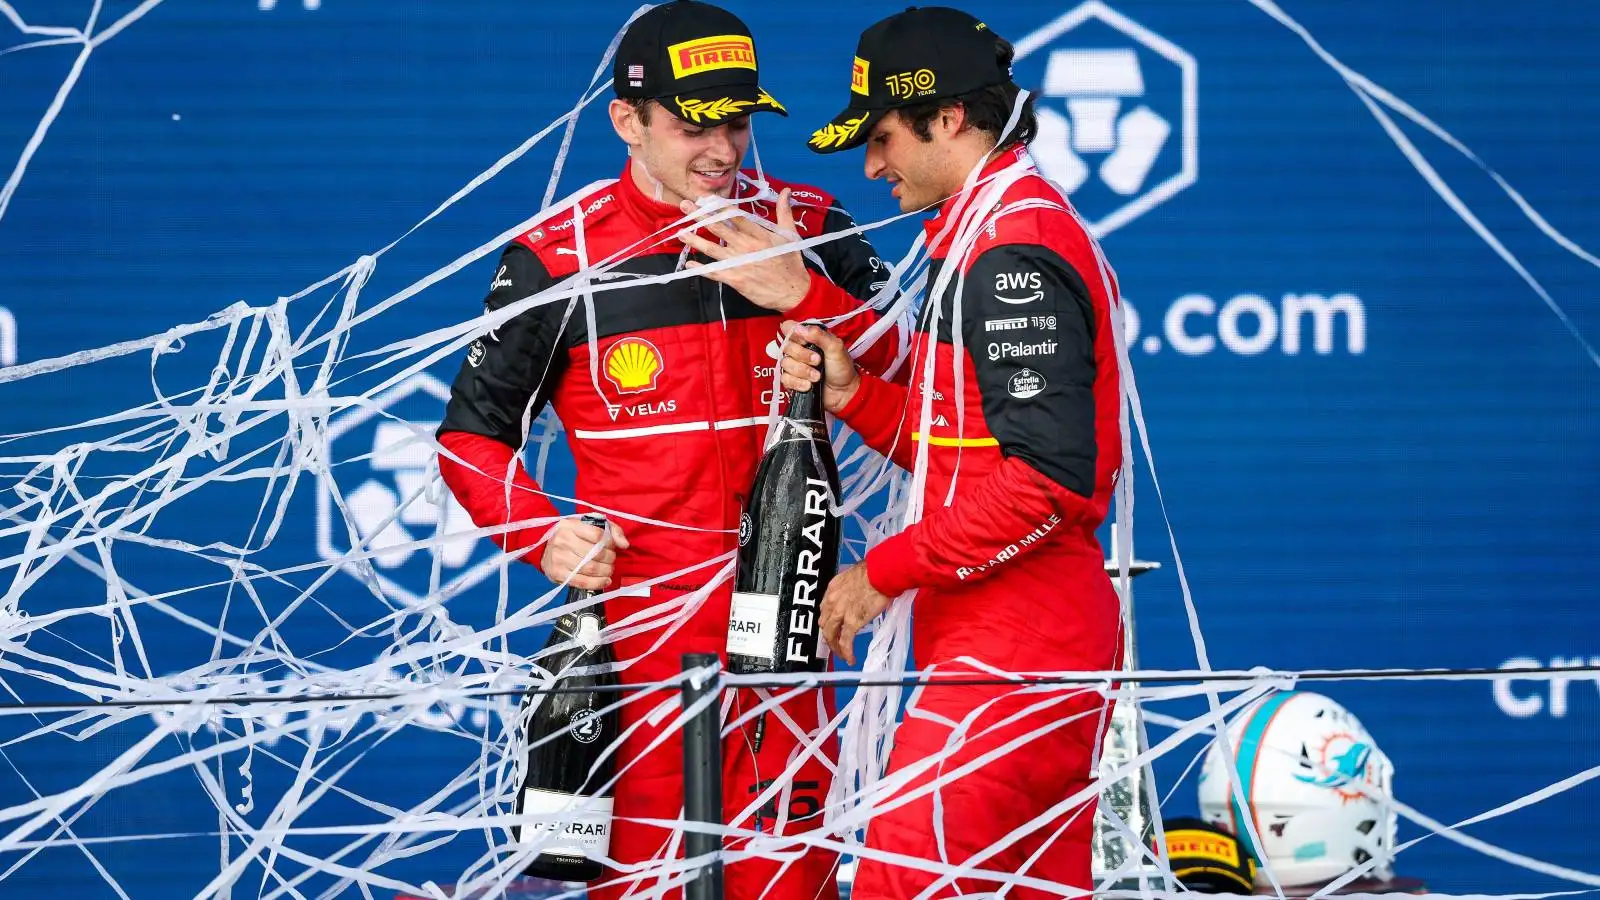 Ferrari drivers Charles Leclerc and Carlos Sainz on the Miami podium. United States, May 2022.